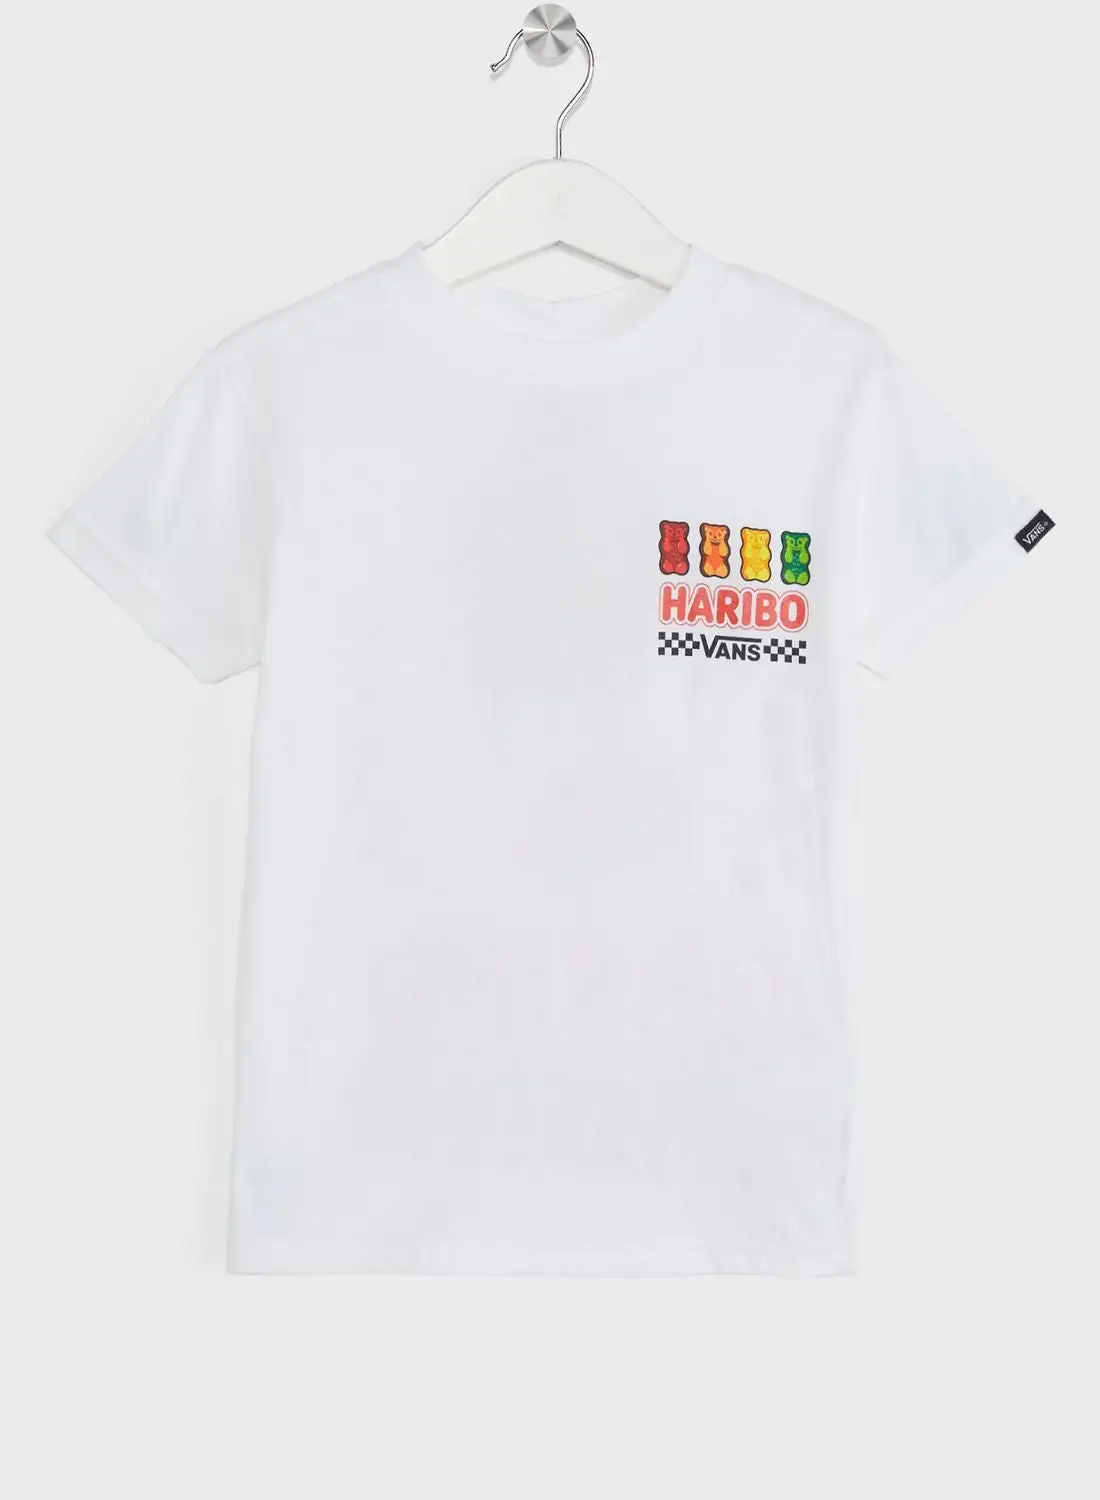 VANS Kids Haribo T-Shirt